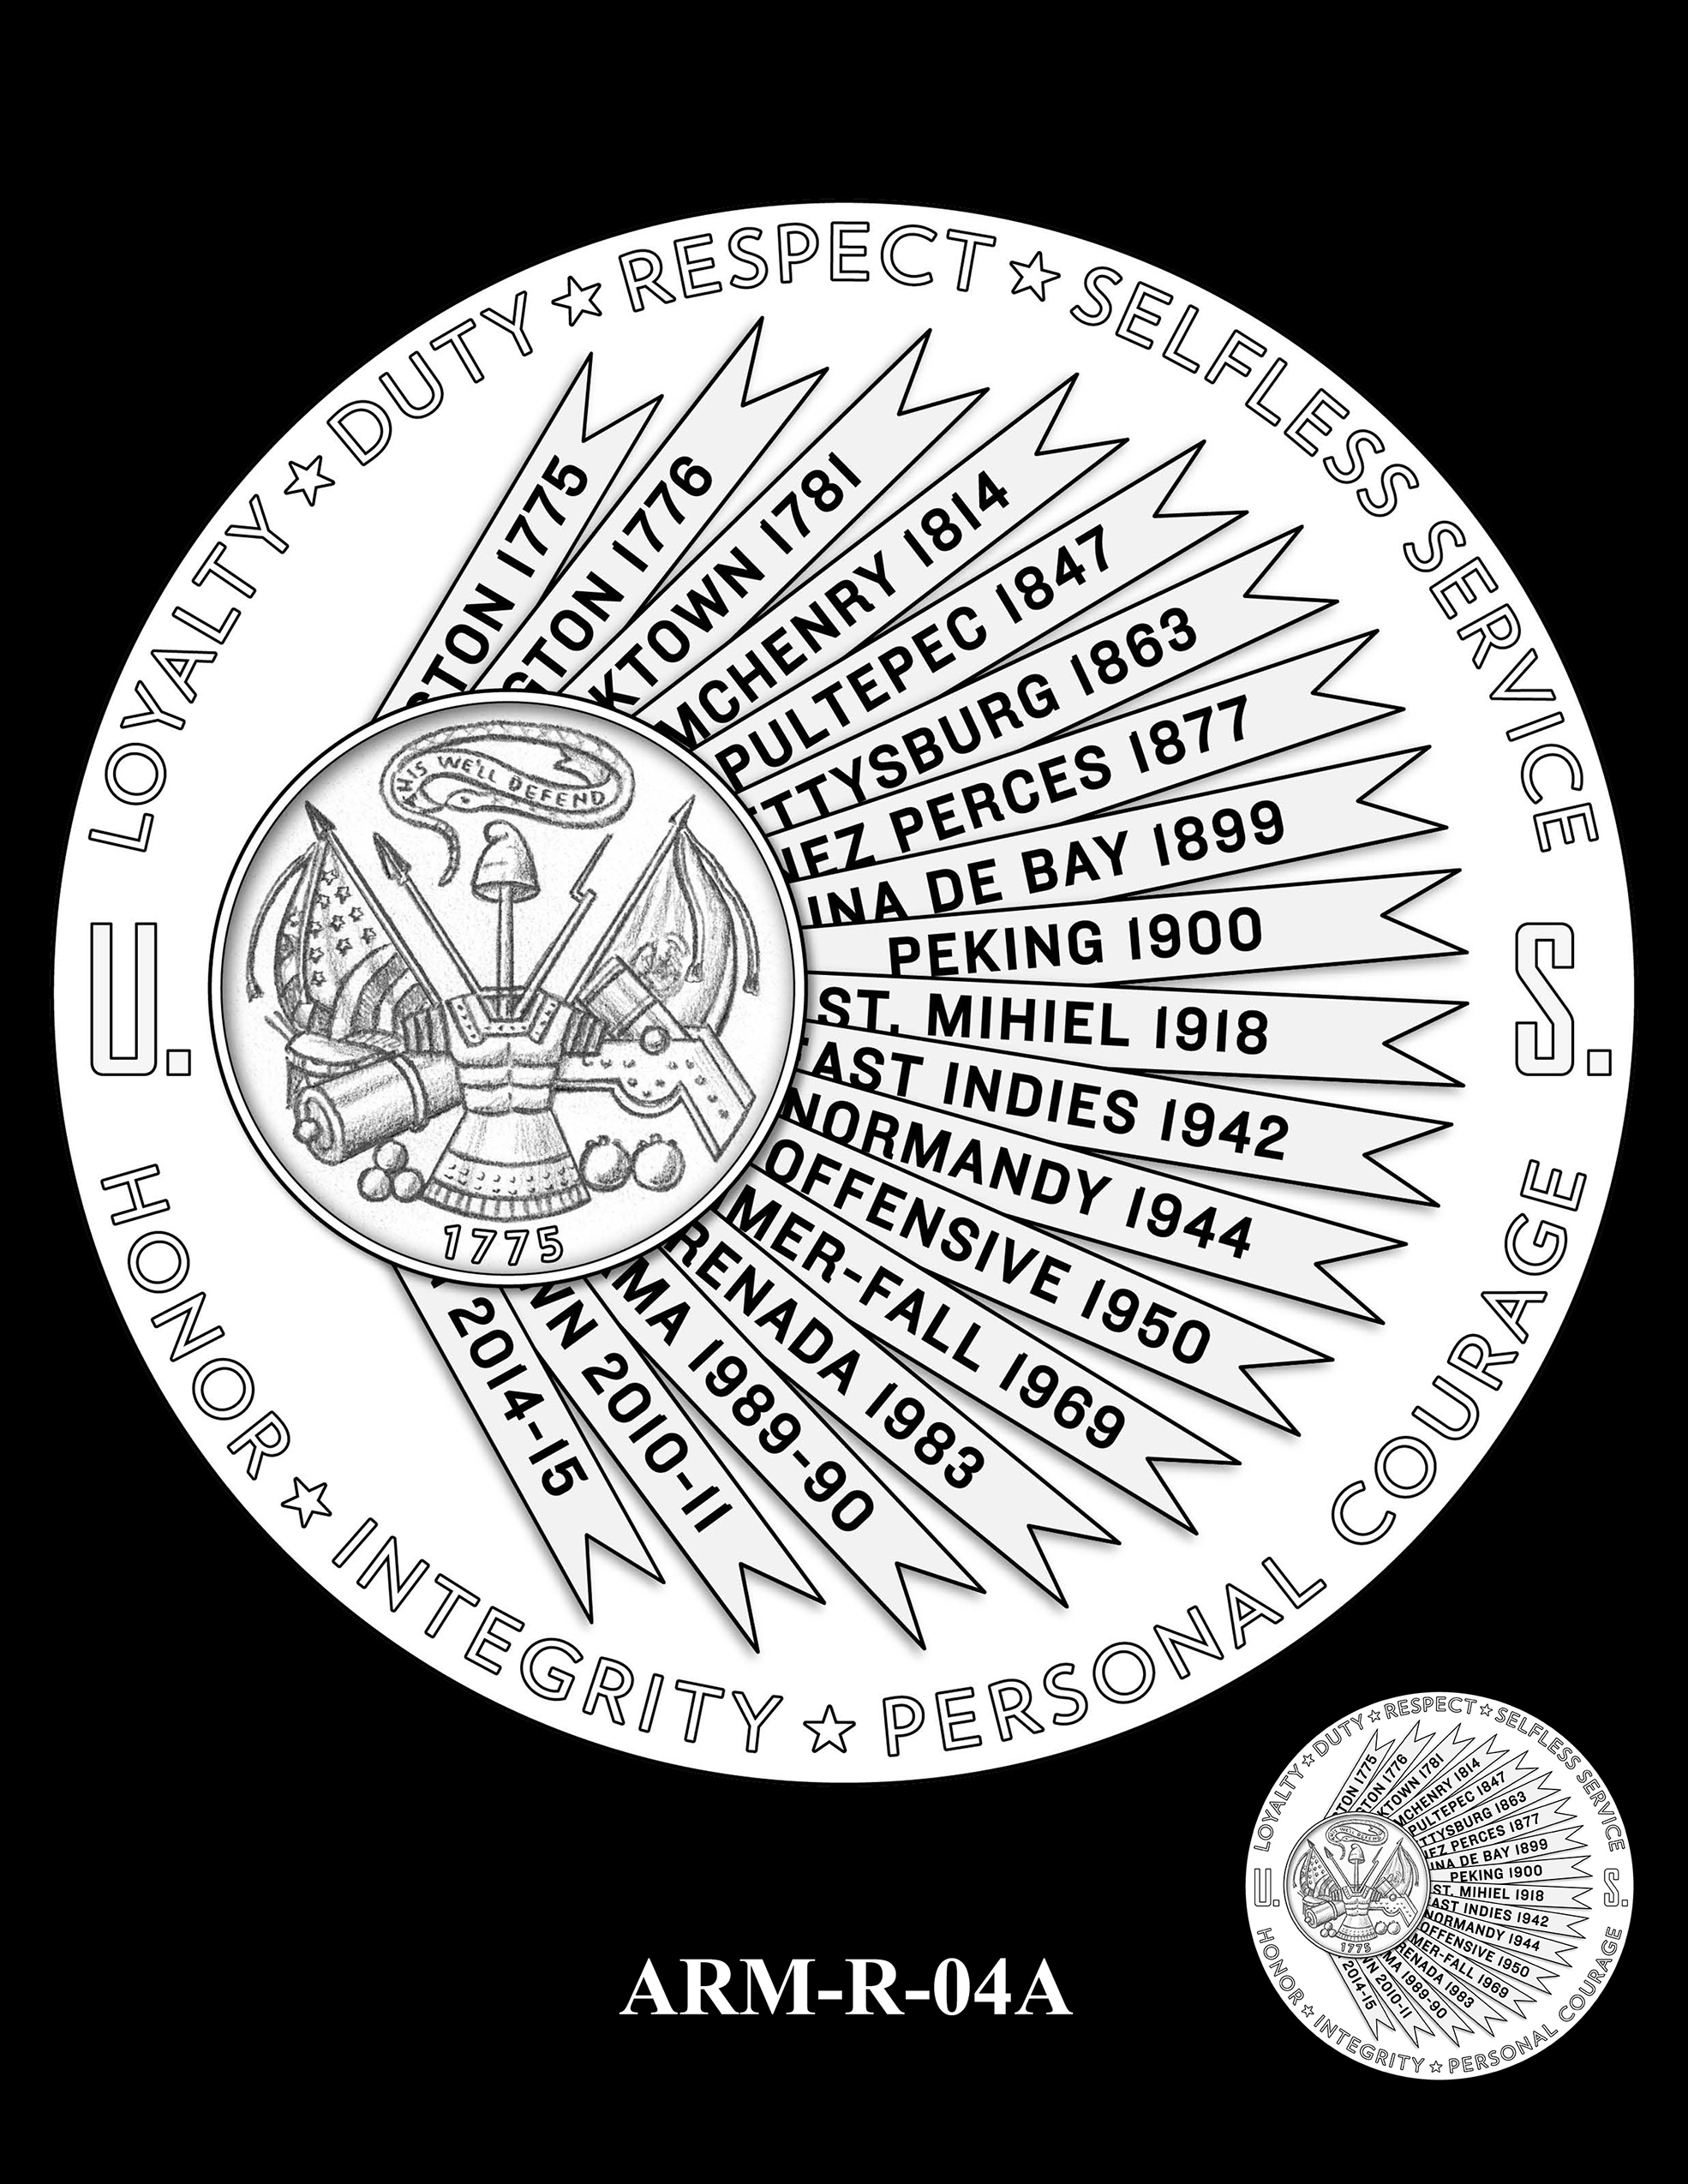 ARM-R-04A -- United States Army Silver Medal